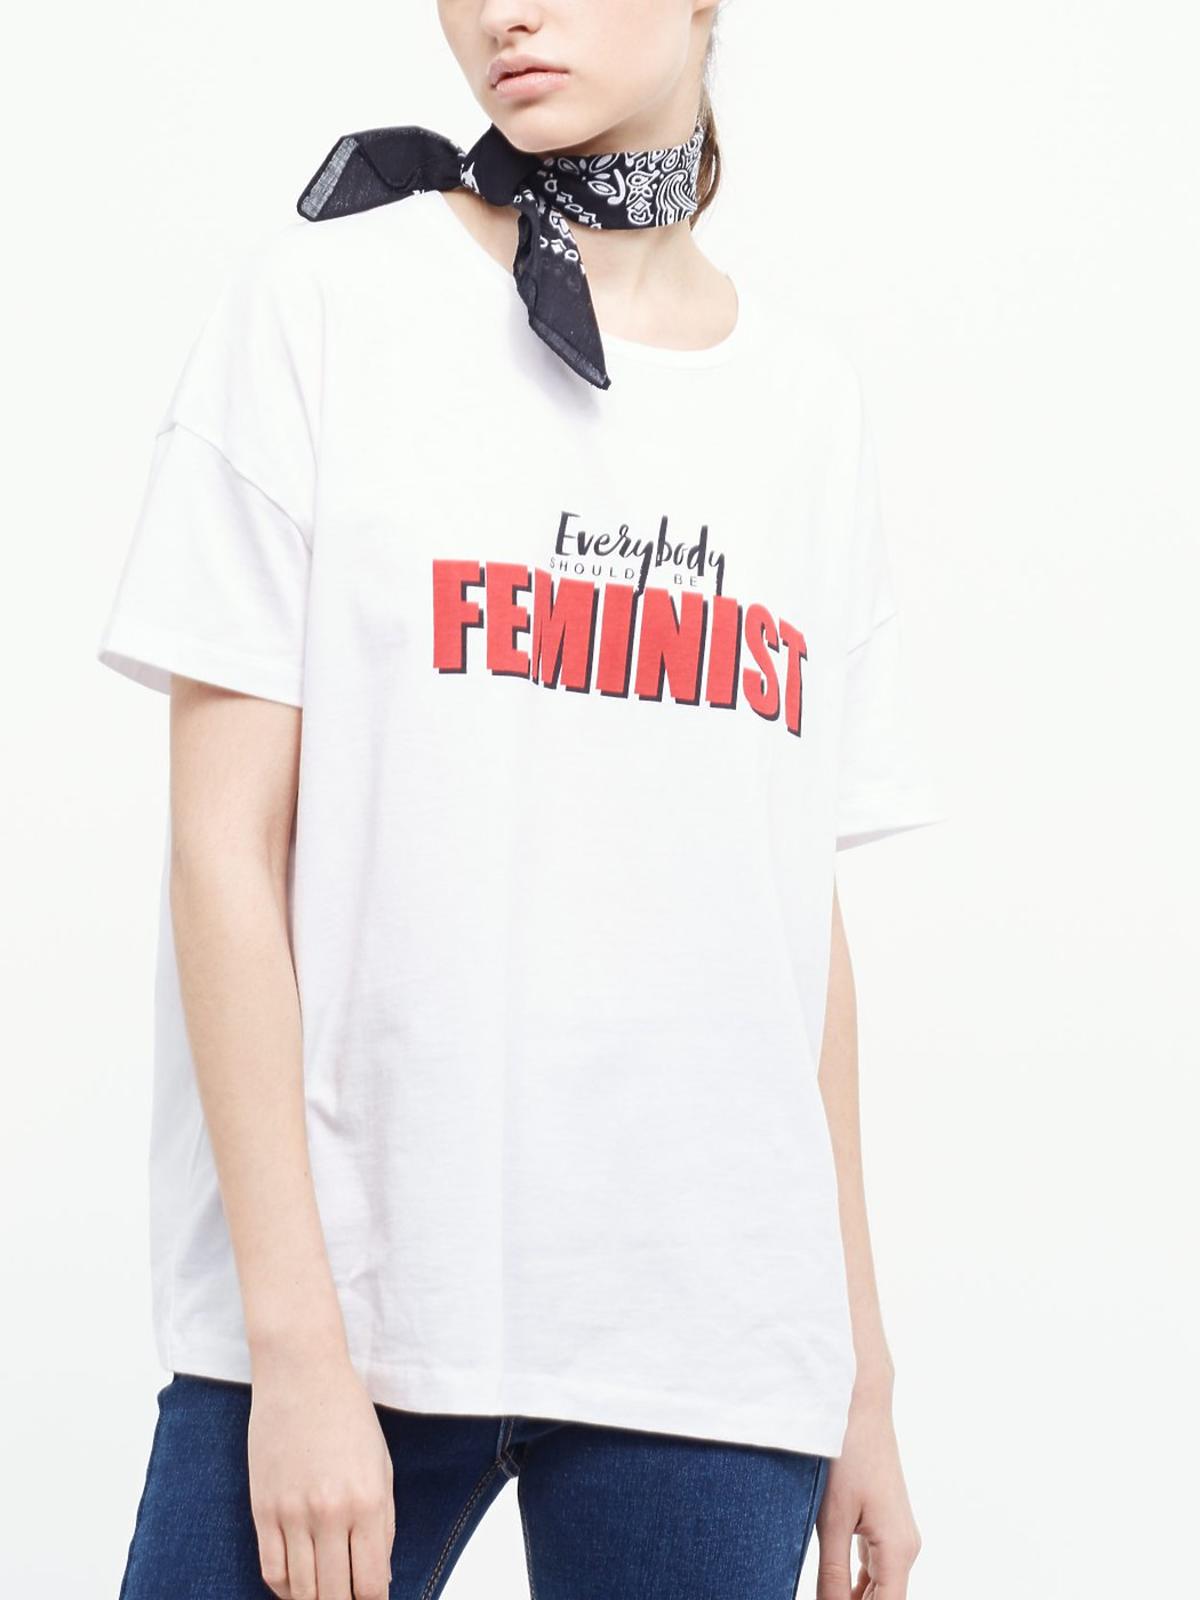 T-shirt Everybody should be femist - Stradivarius - 29 zł